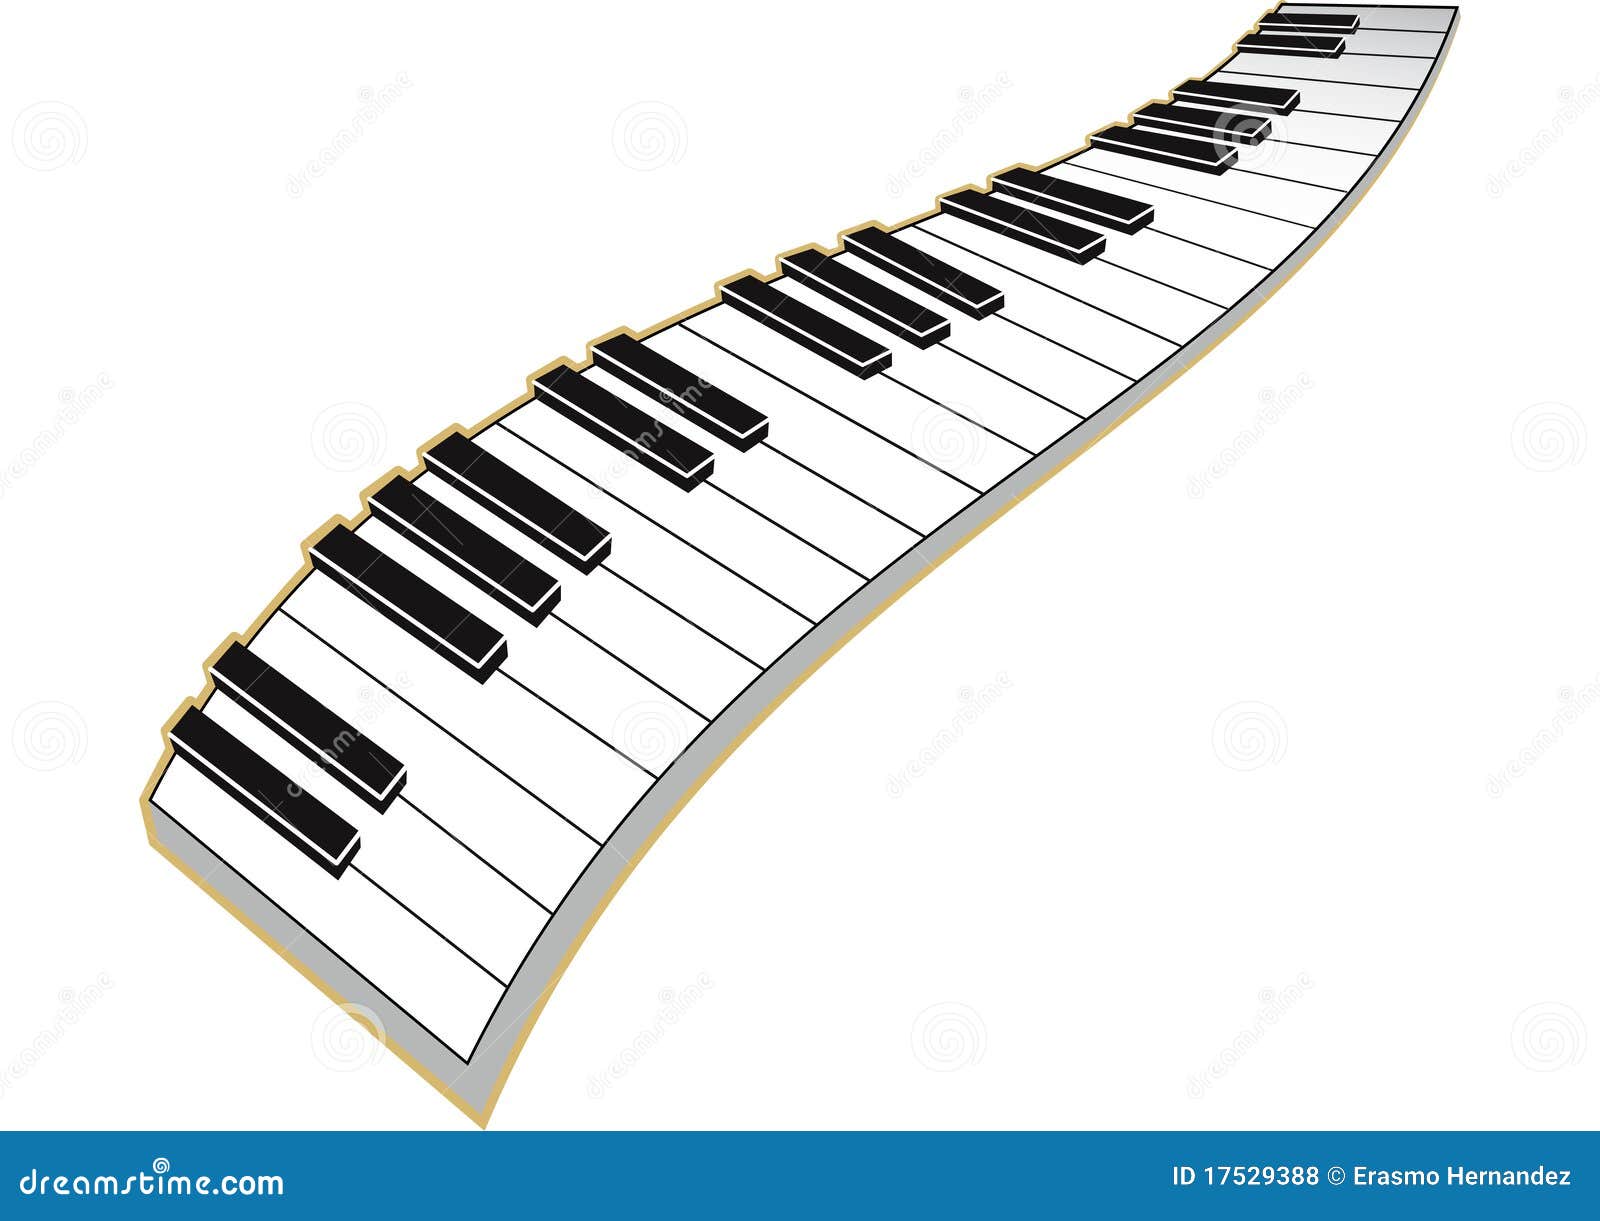 music keyboard clipart - photo #17